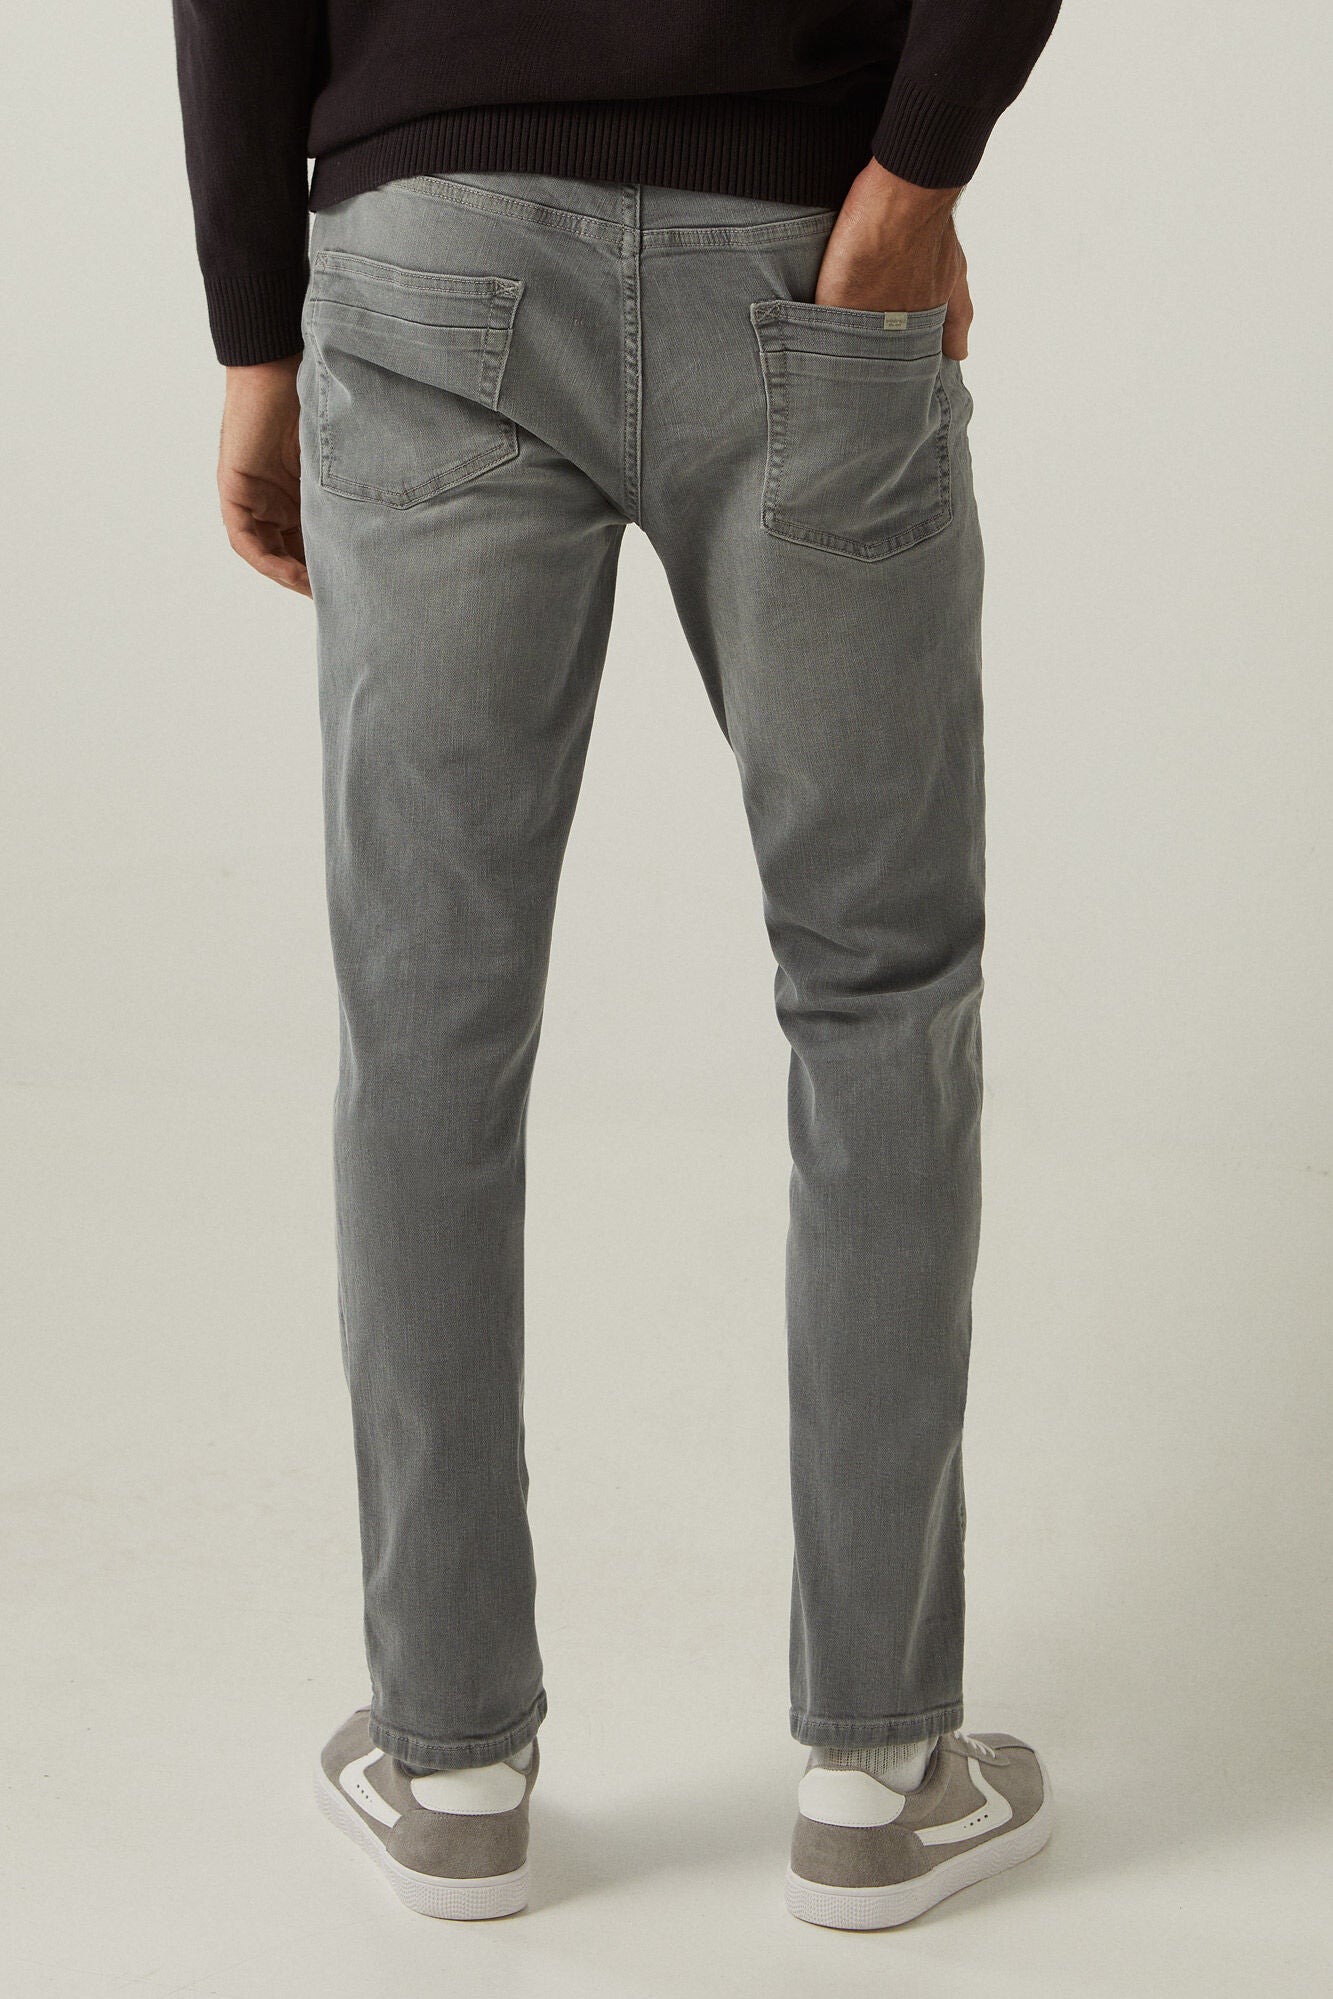 Grey medium-light wash skinny jeans